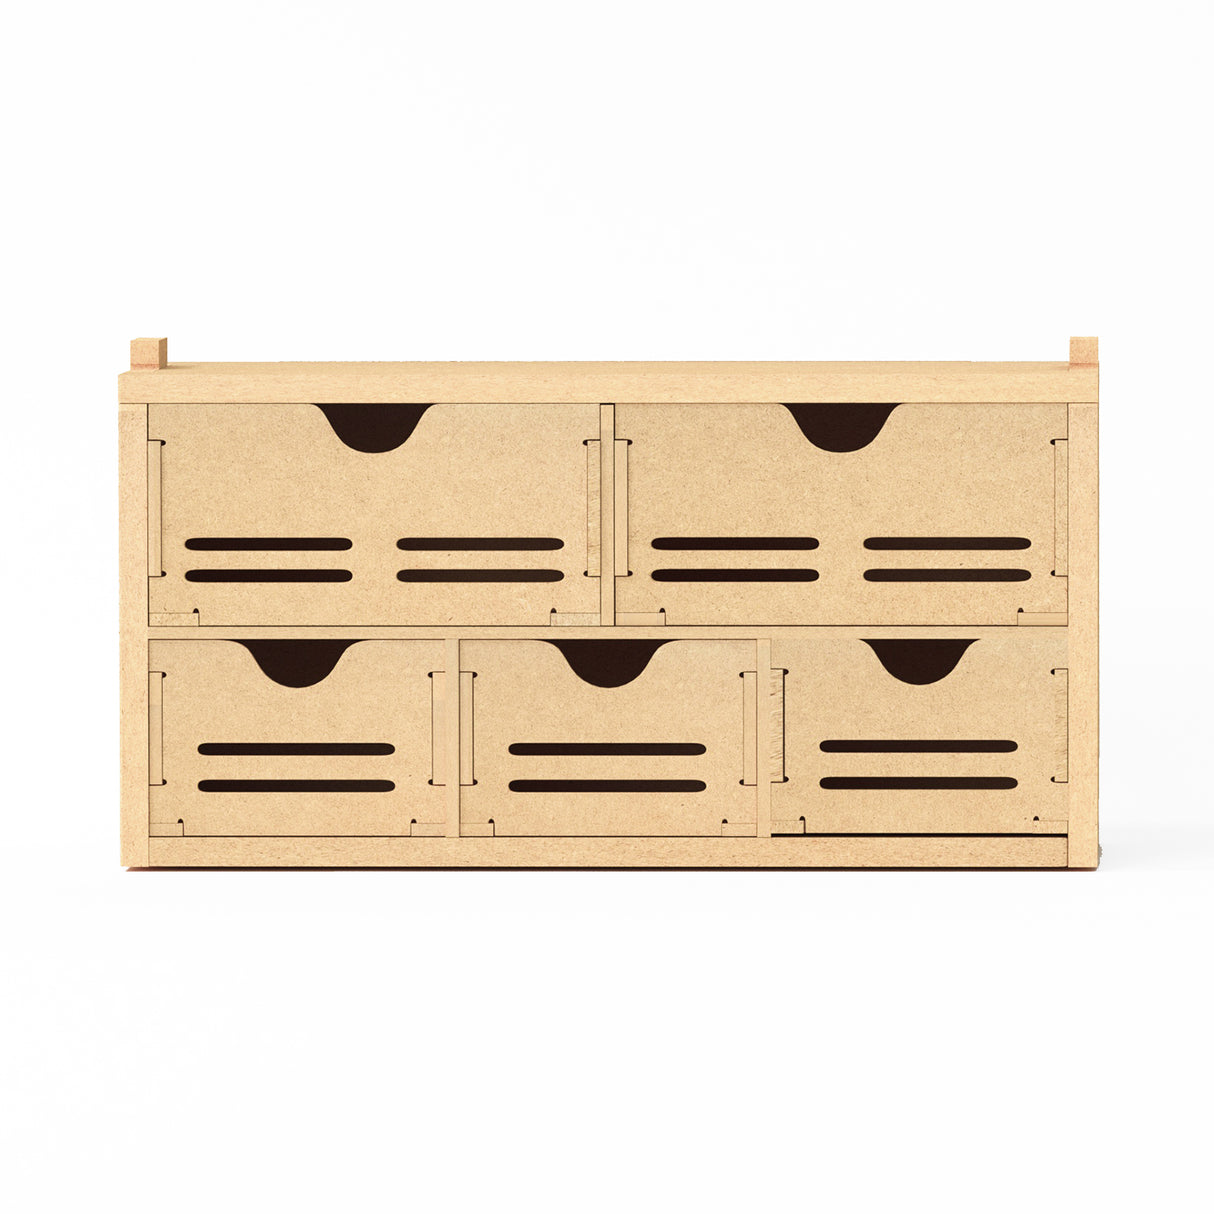 Bucasso GK6 Wooden Model Kit Tool Storage, Brush/Paint Organizer , Craft Supplies Storage, Tool Holder, Suitable for Tamiya/Gundam Tools